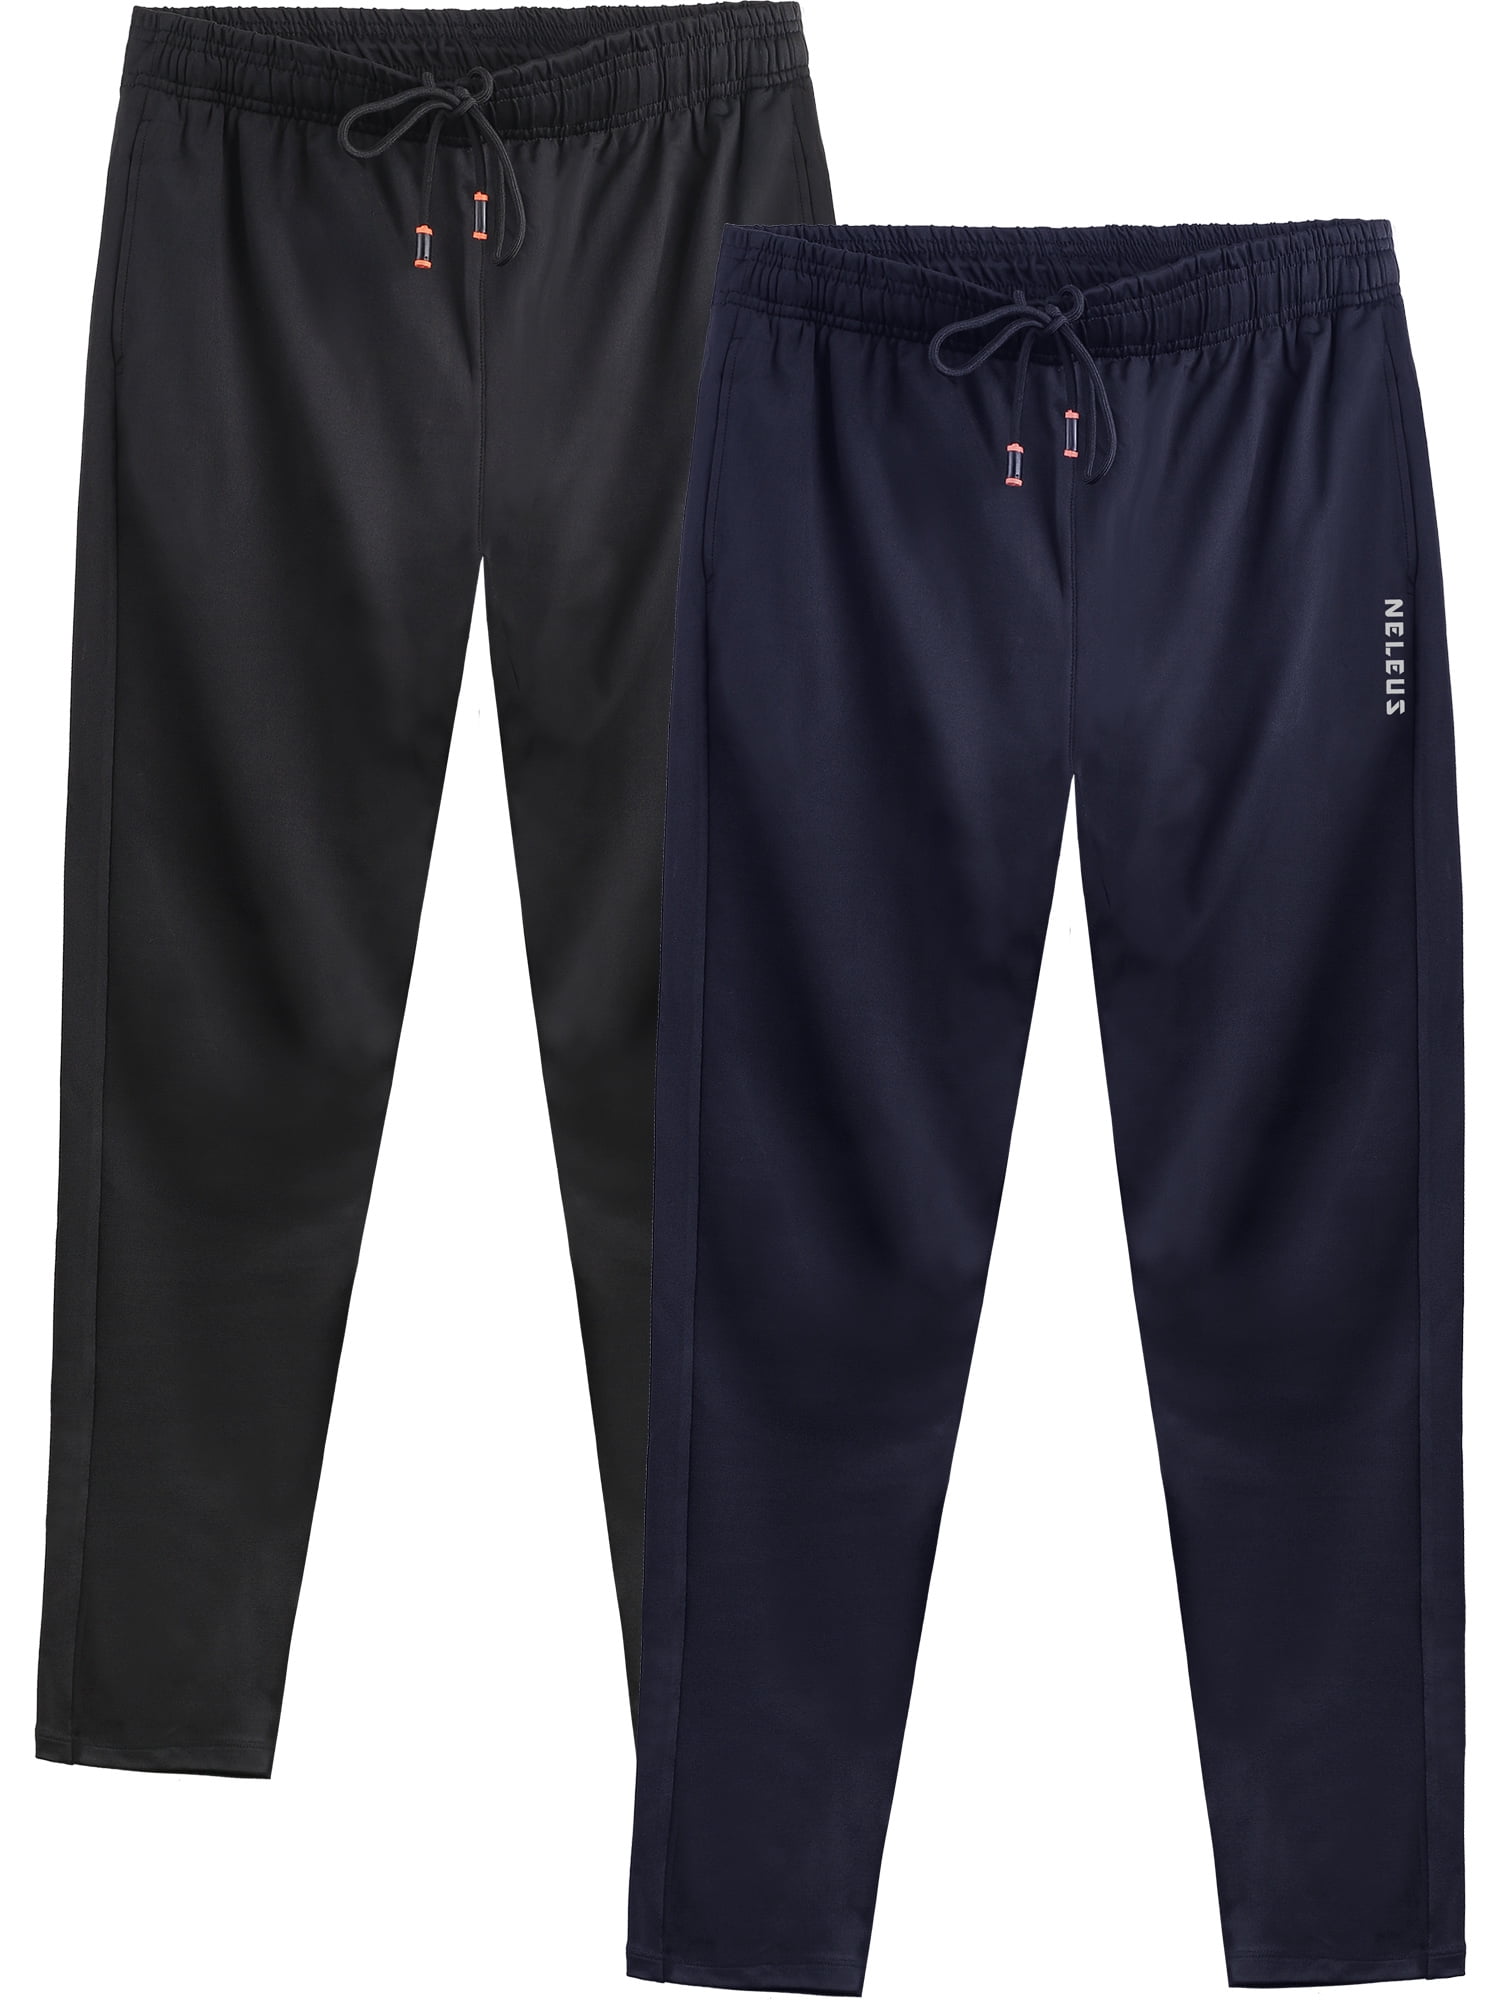 Mens Size S Small Nike Yoga Training Athletic Sweats Pants Navy Blue  CU6782-410